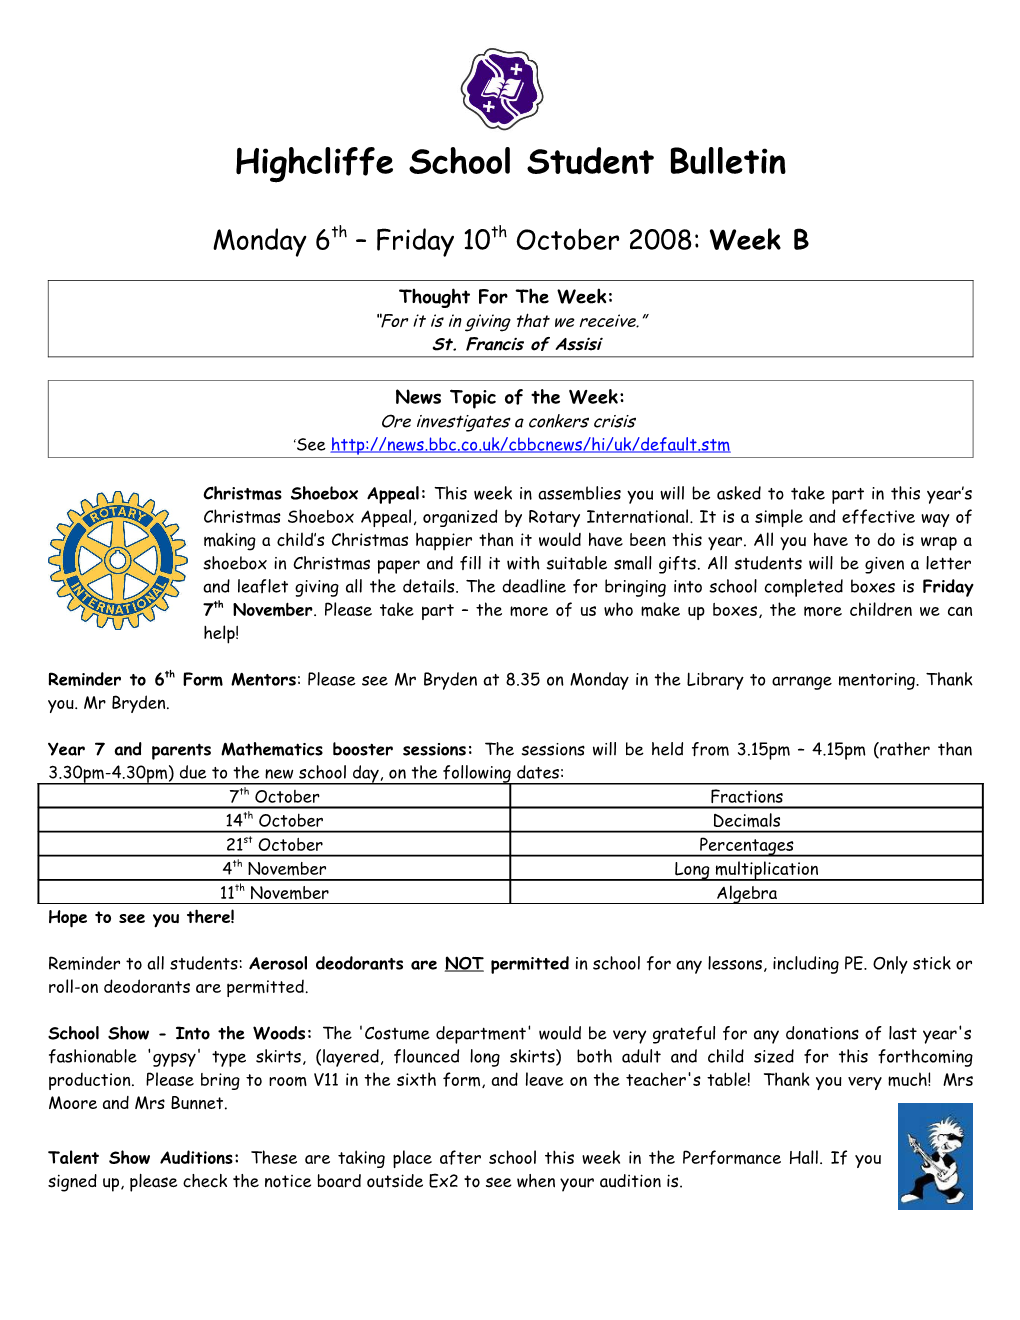 Highcliffe School Student Bulletin s2